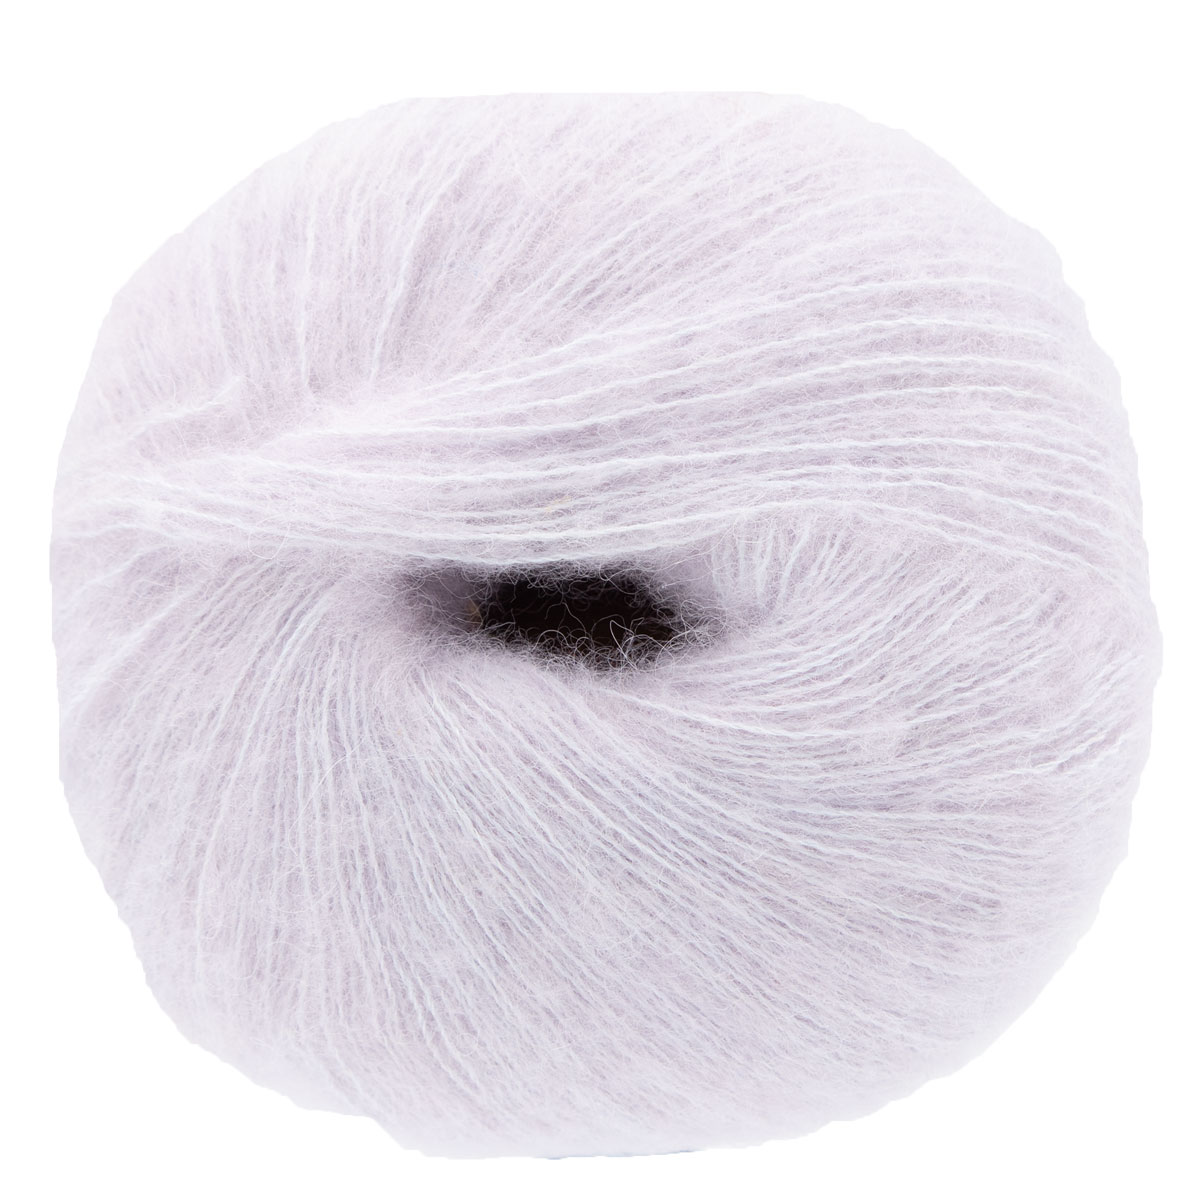 TEHETE 100% Cashmere Yarn for Crocheting 3-Ply Warm Soft Luxurious Fuzzy  knitting Yarn (Beige)